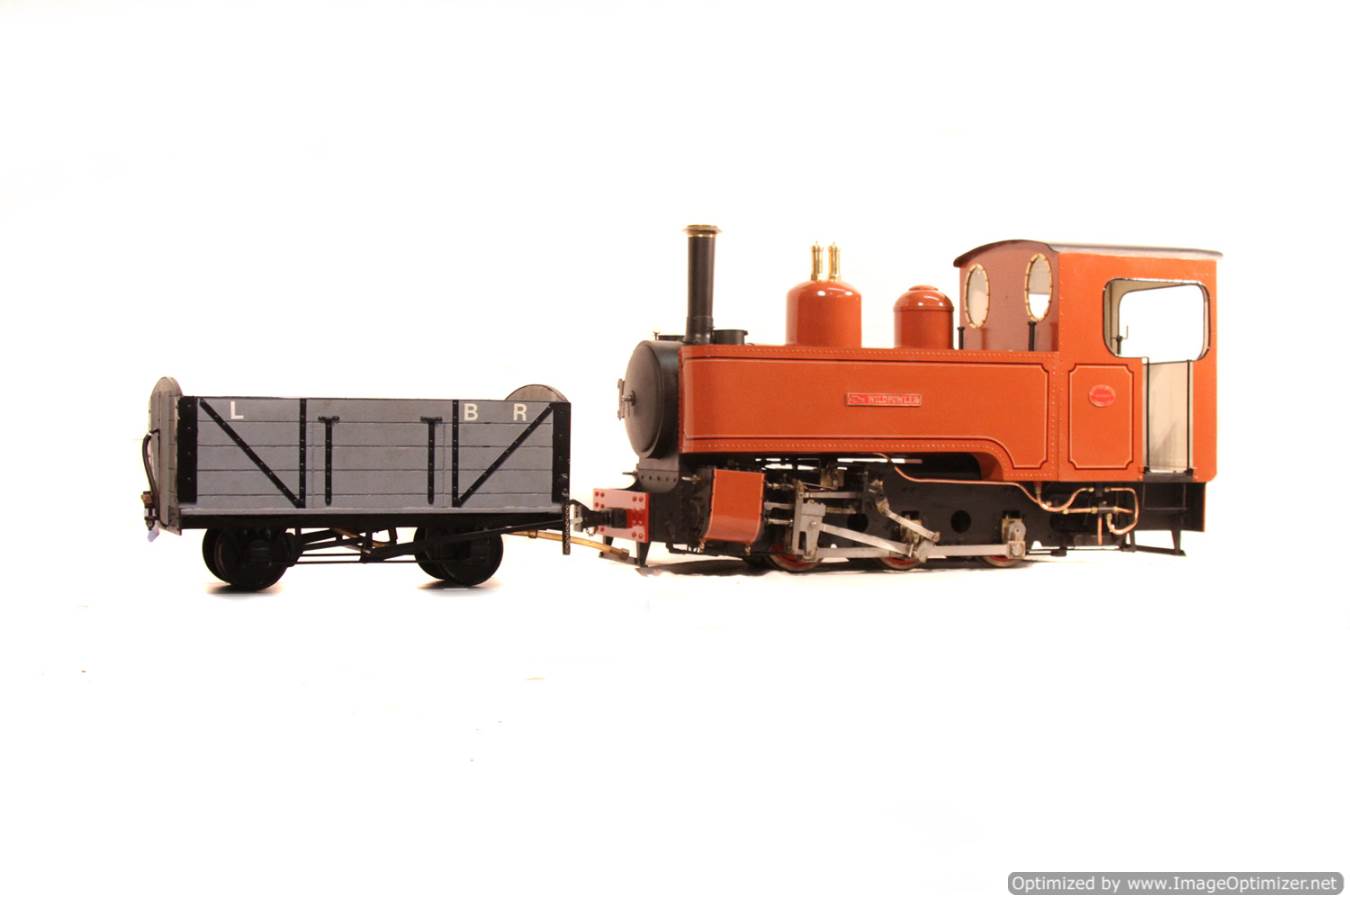 test 5 inch Gauge Fowler Live Steam Locomotive for sale 14 Optimized